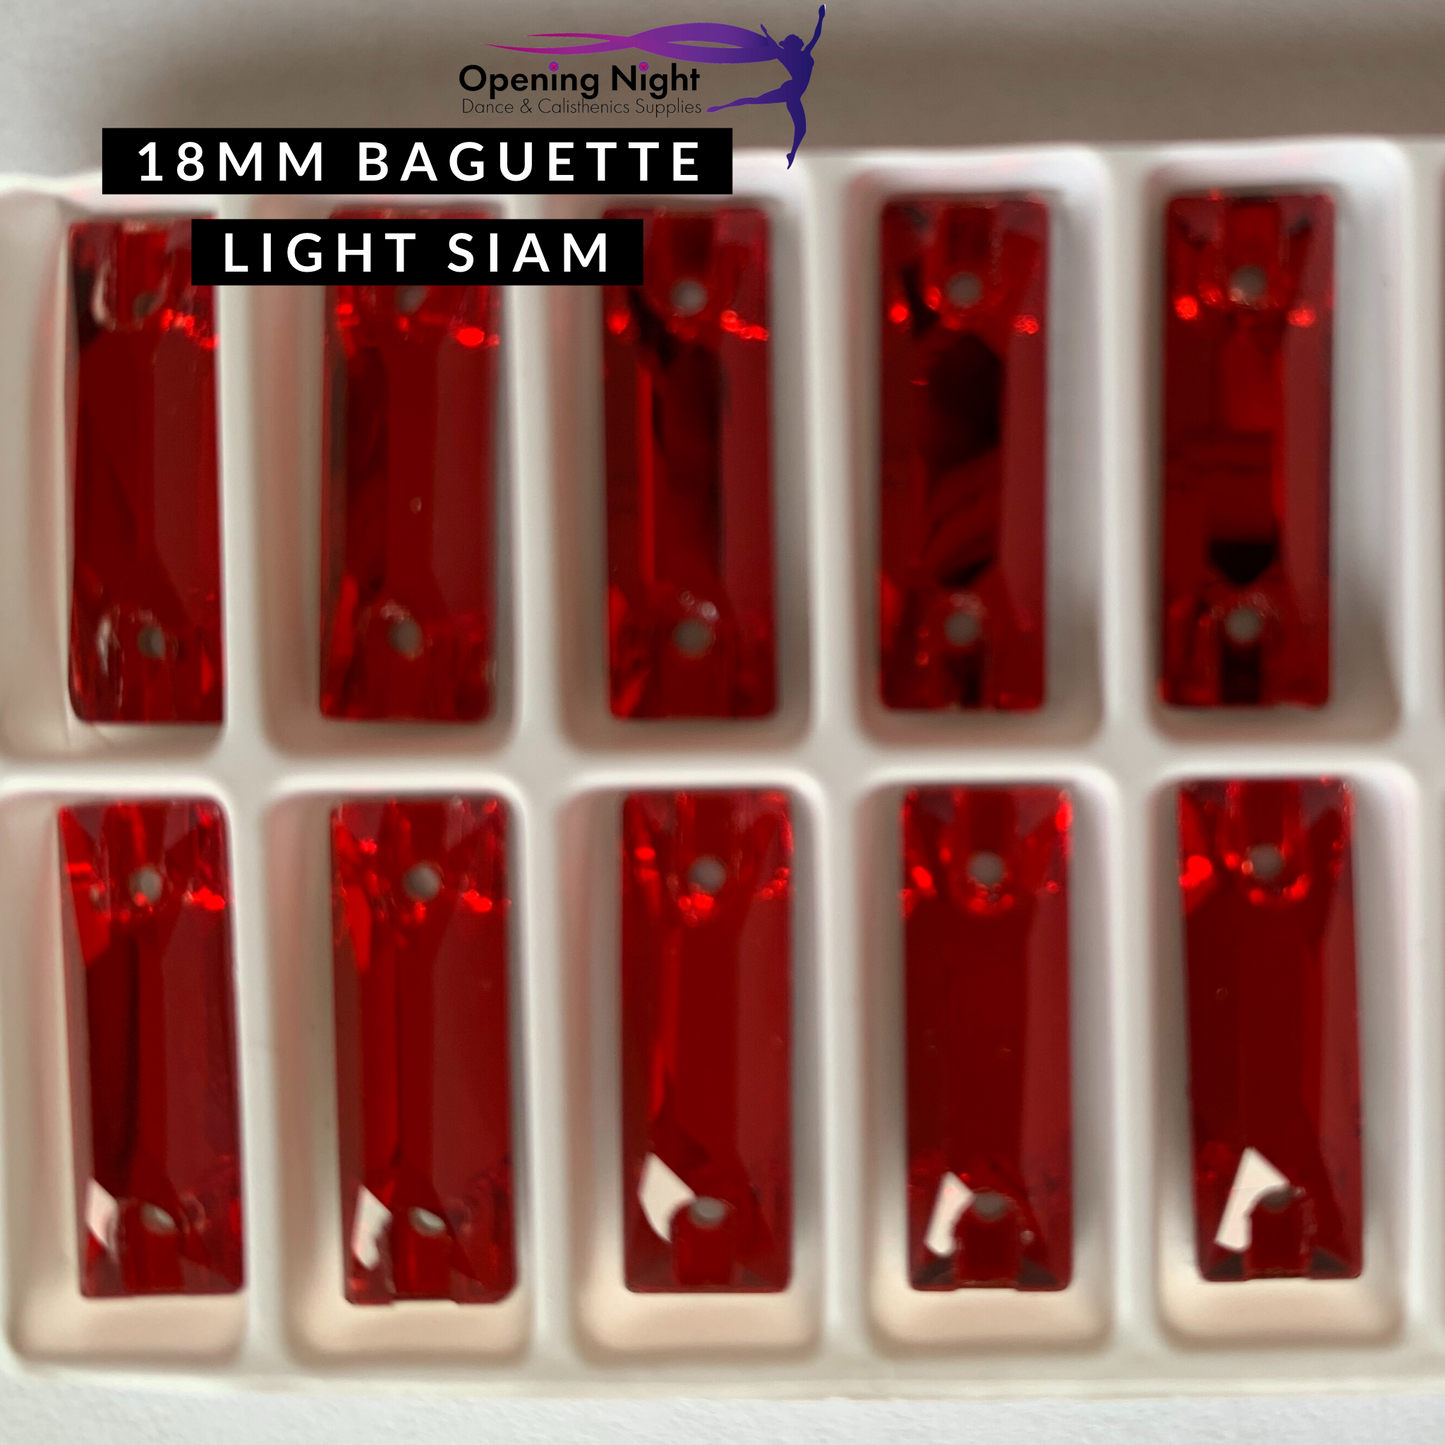 Cosmic Baguette 18mm, Light Siam